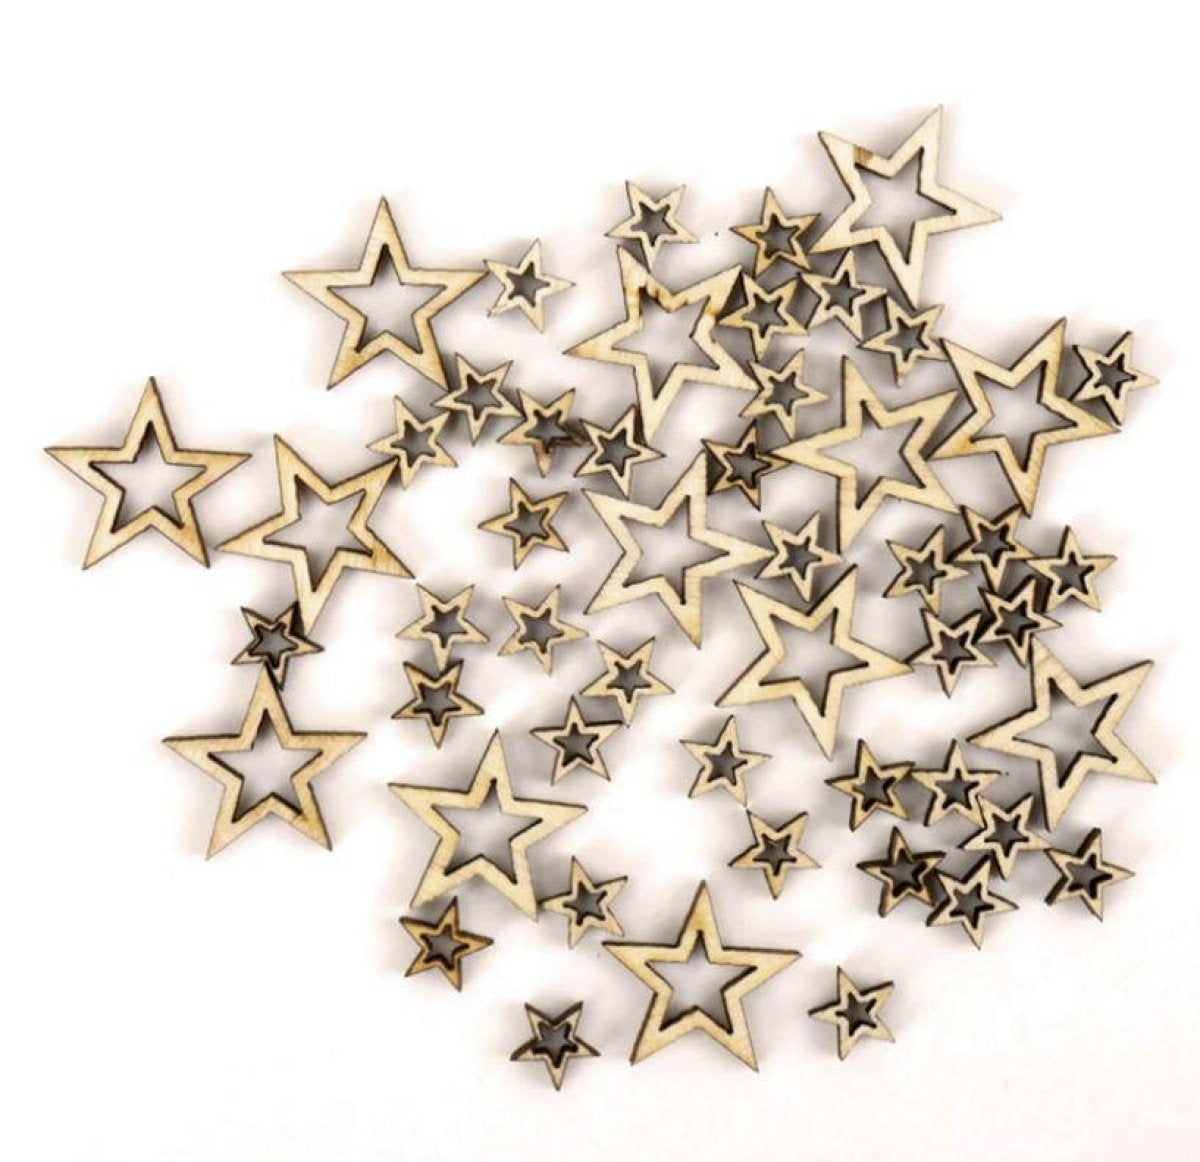 50Pcs Wooden Stars Confetti 10-20mm Mixed Wood Crafts Decorations